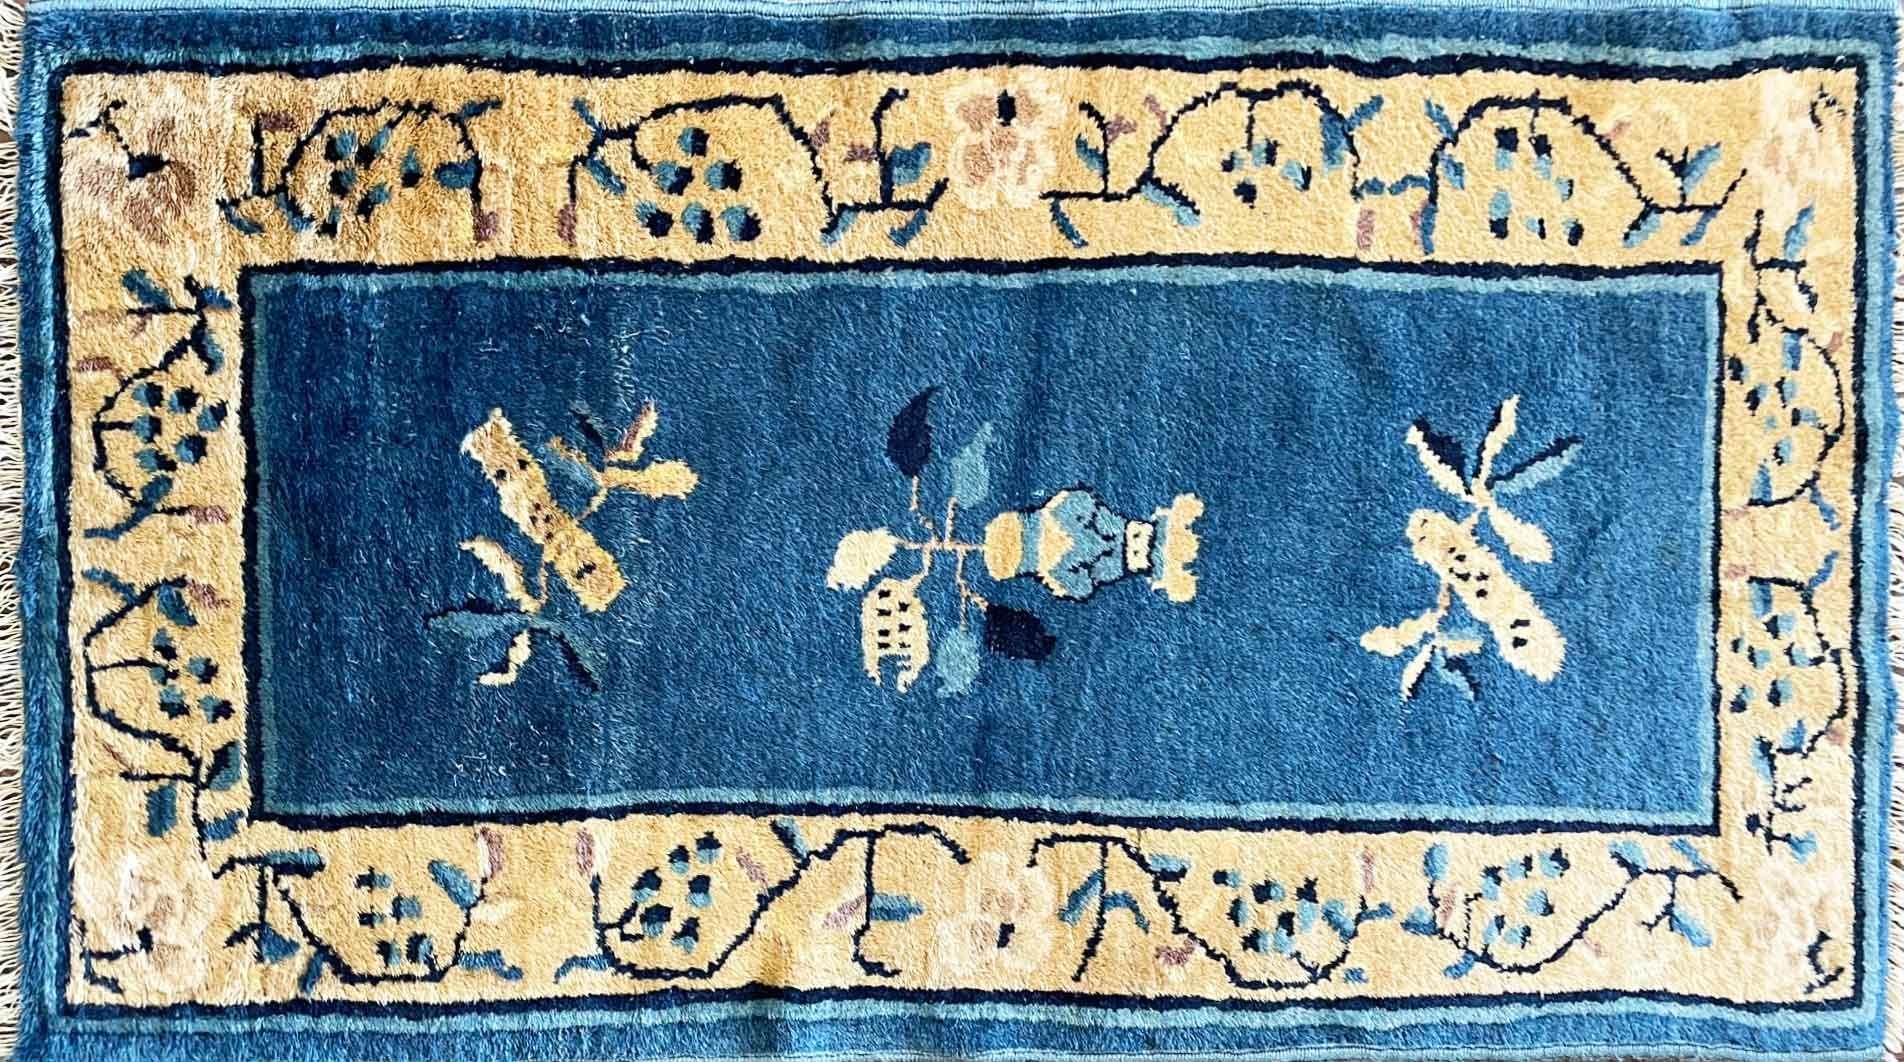 Antique Peking Art Deco Chinese rug, c-1910's 2' x 3'10